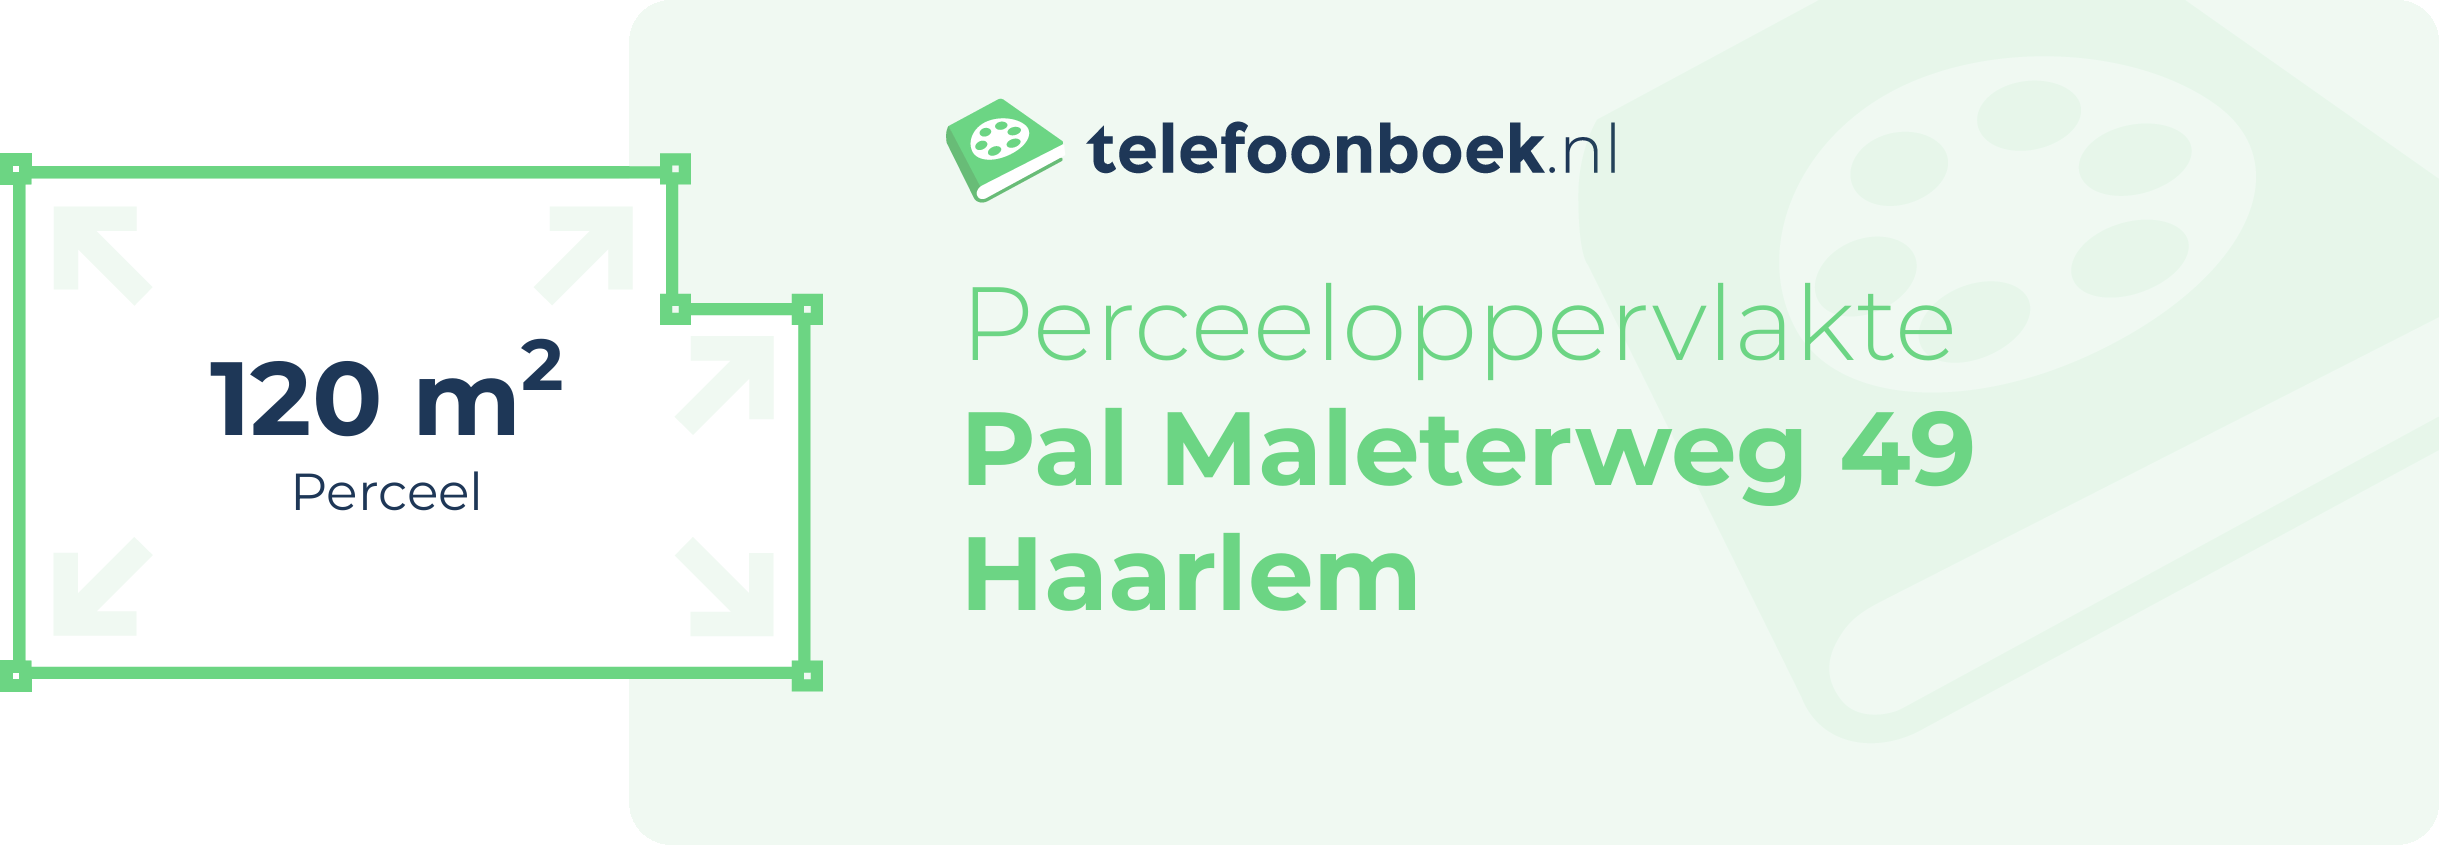 Perceeloppervlakte Pal Maleterweg 49 Haarlem